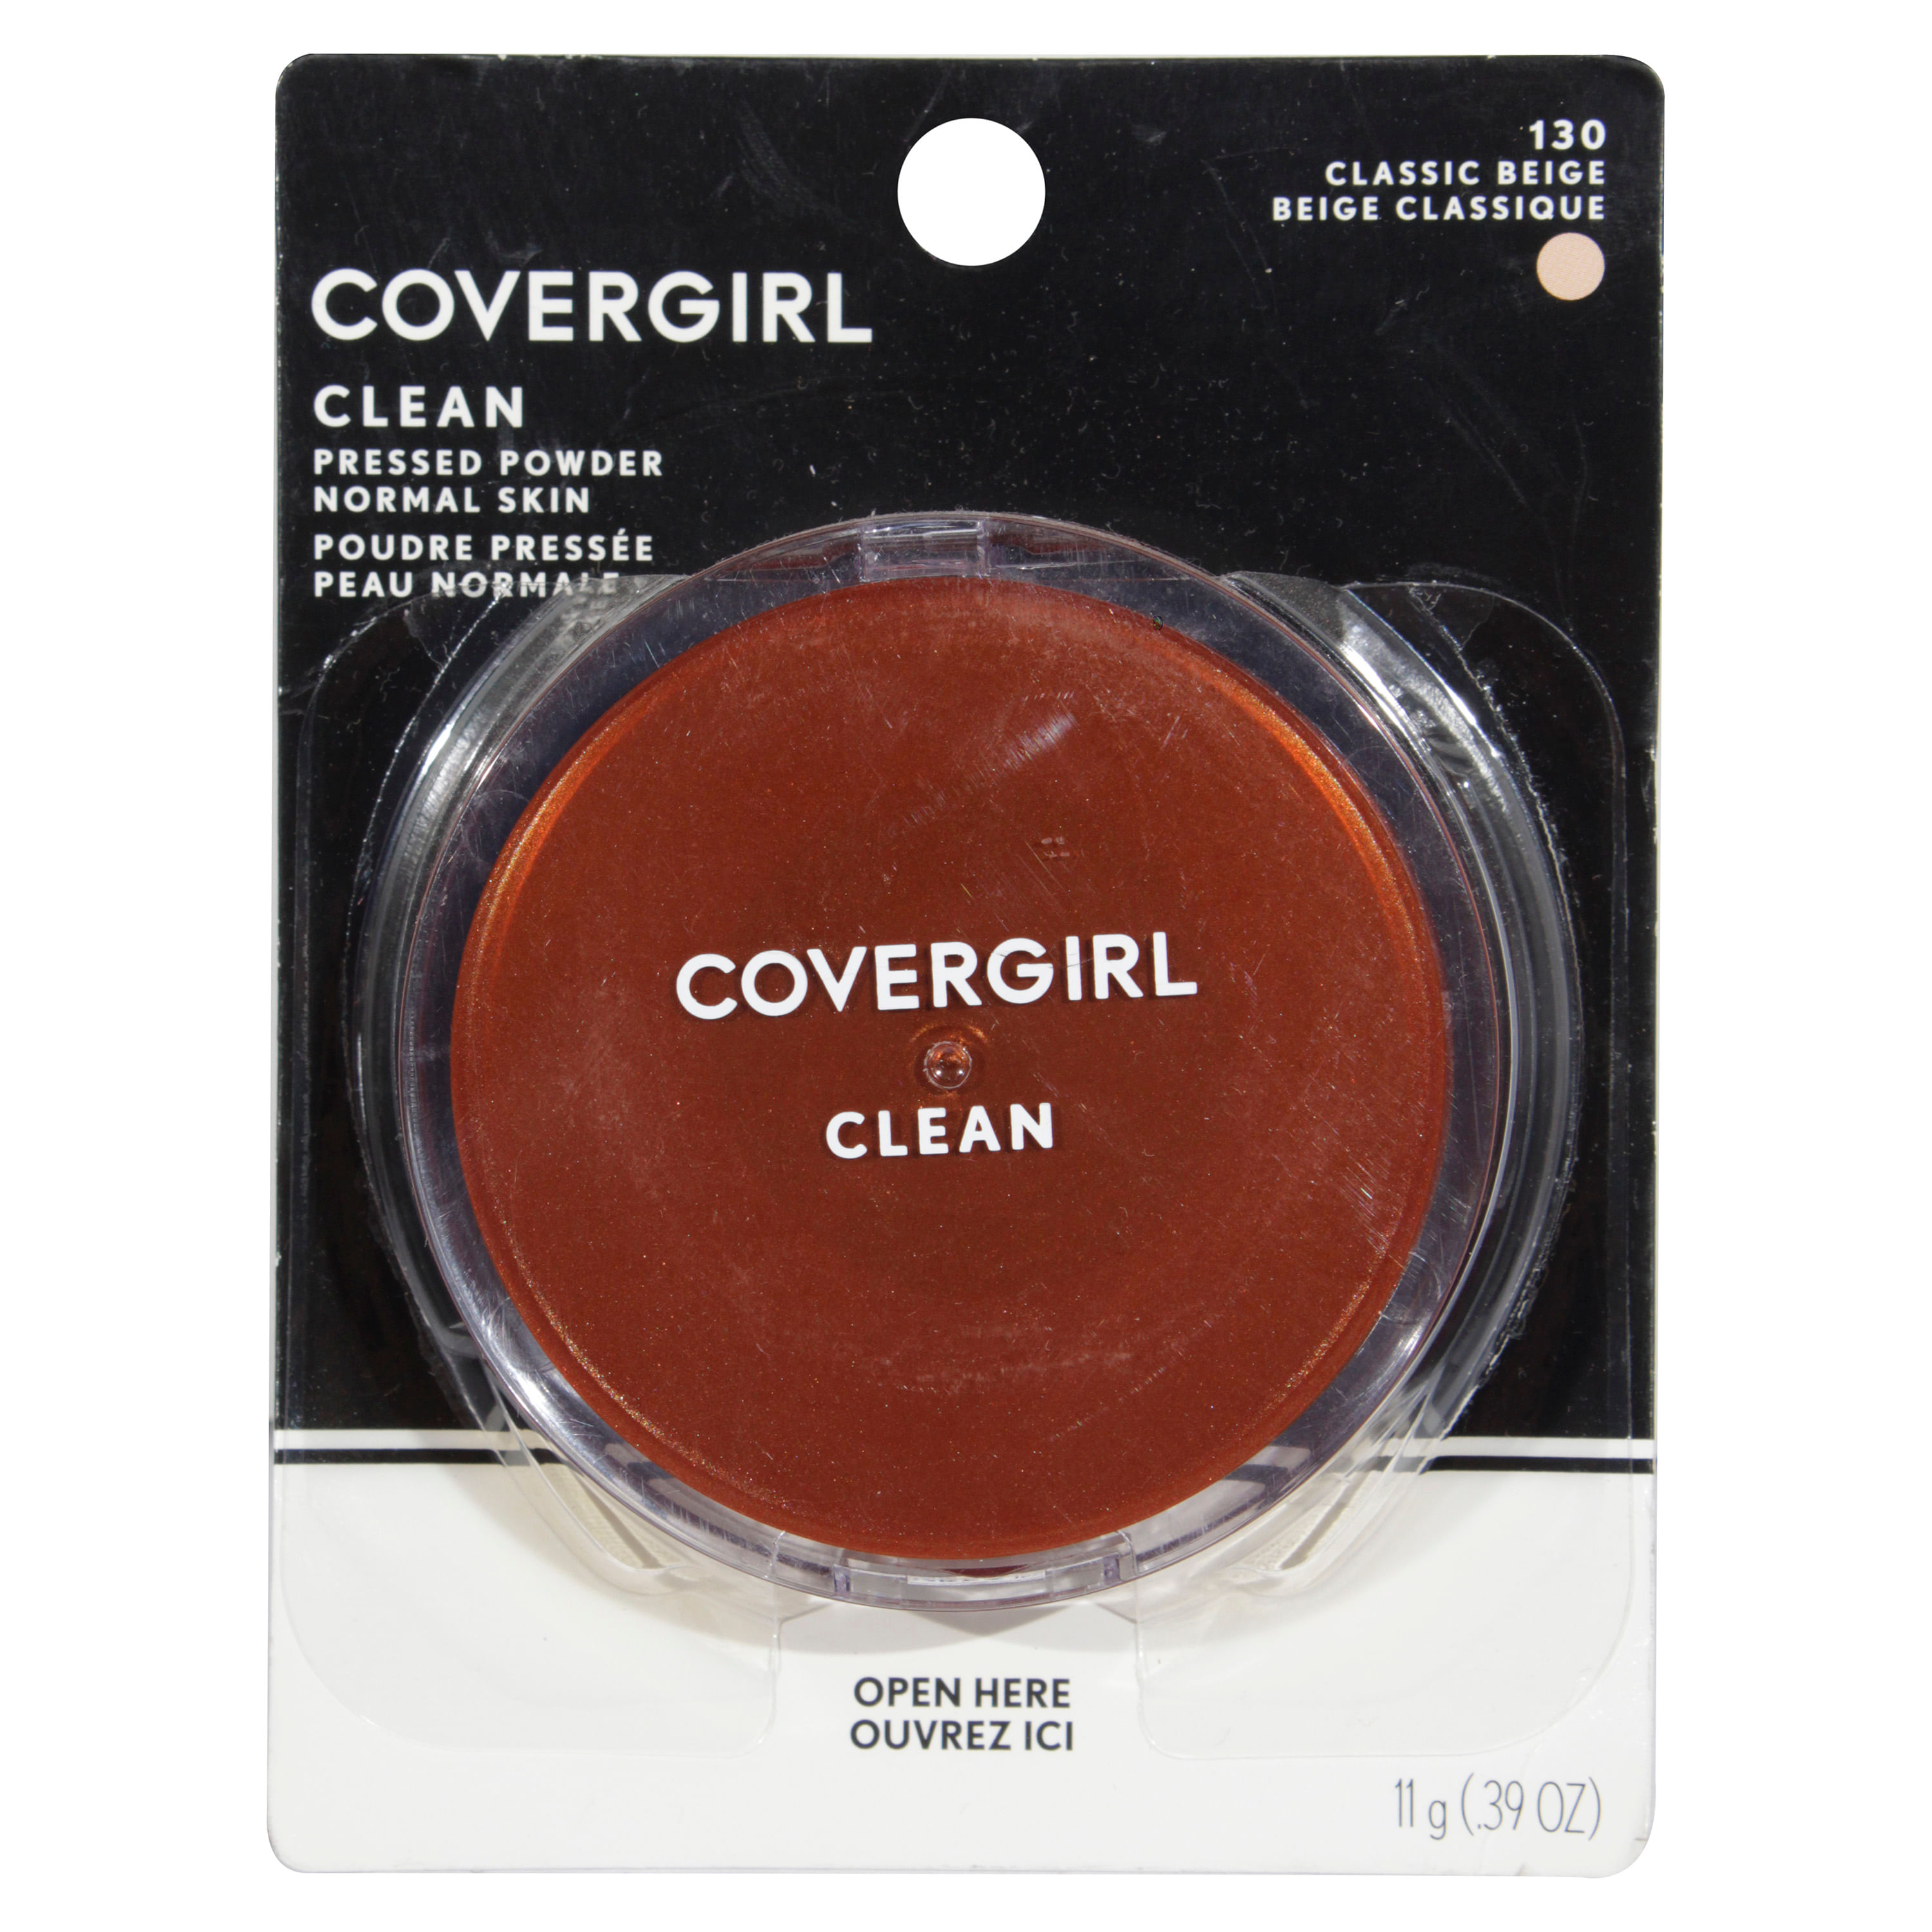 Covergirl-Polvo-Normal-Skin-Buff-Beige-1-4453